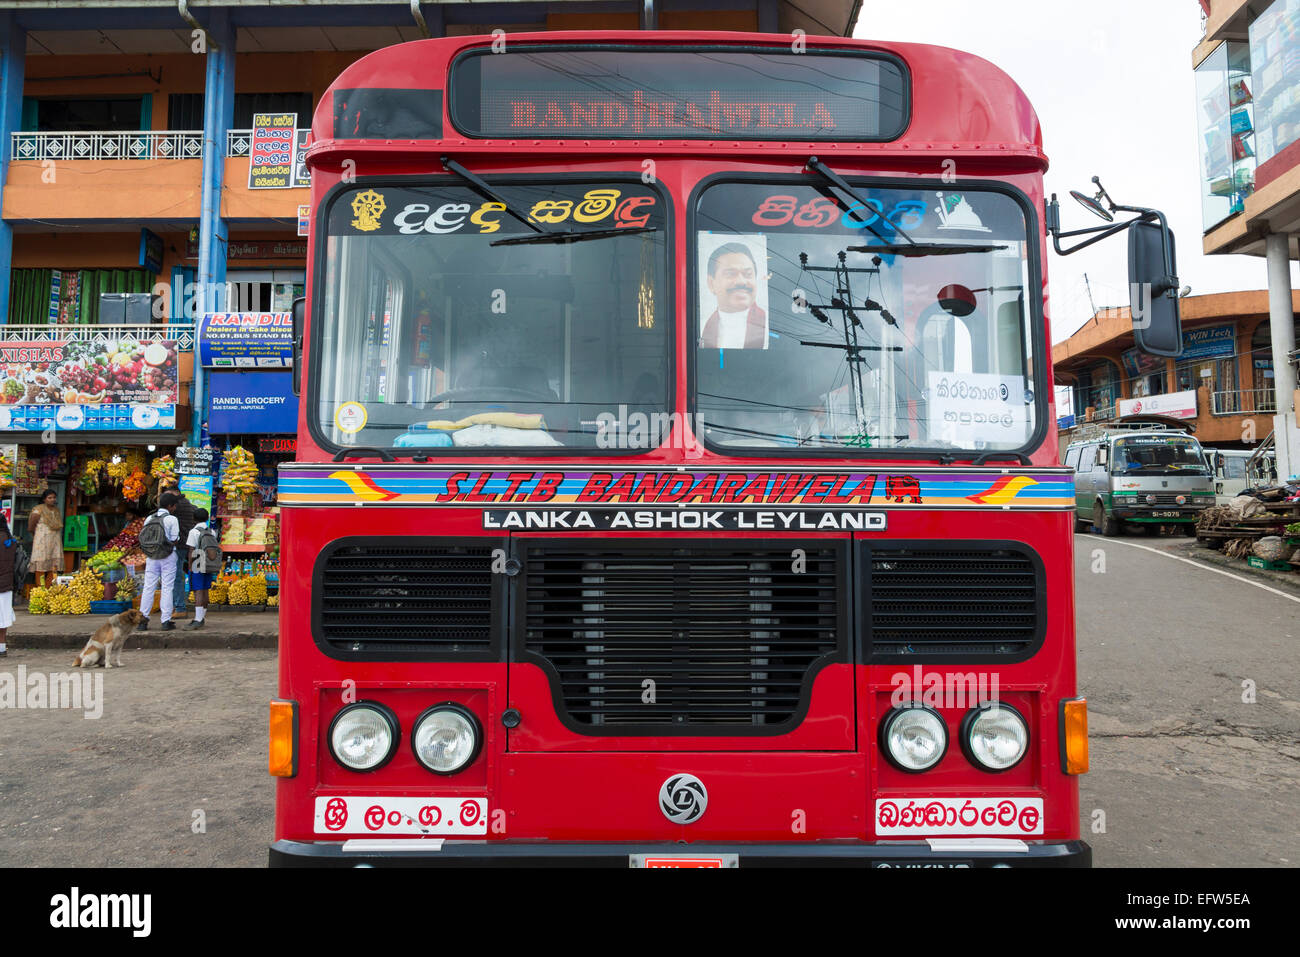 Bus local, la province d'Uva, Haputale, Sri Lanka. Banque D'Images